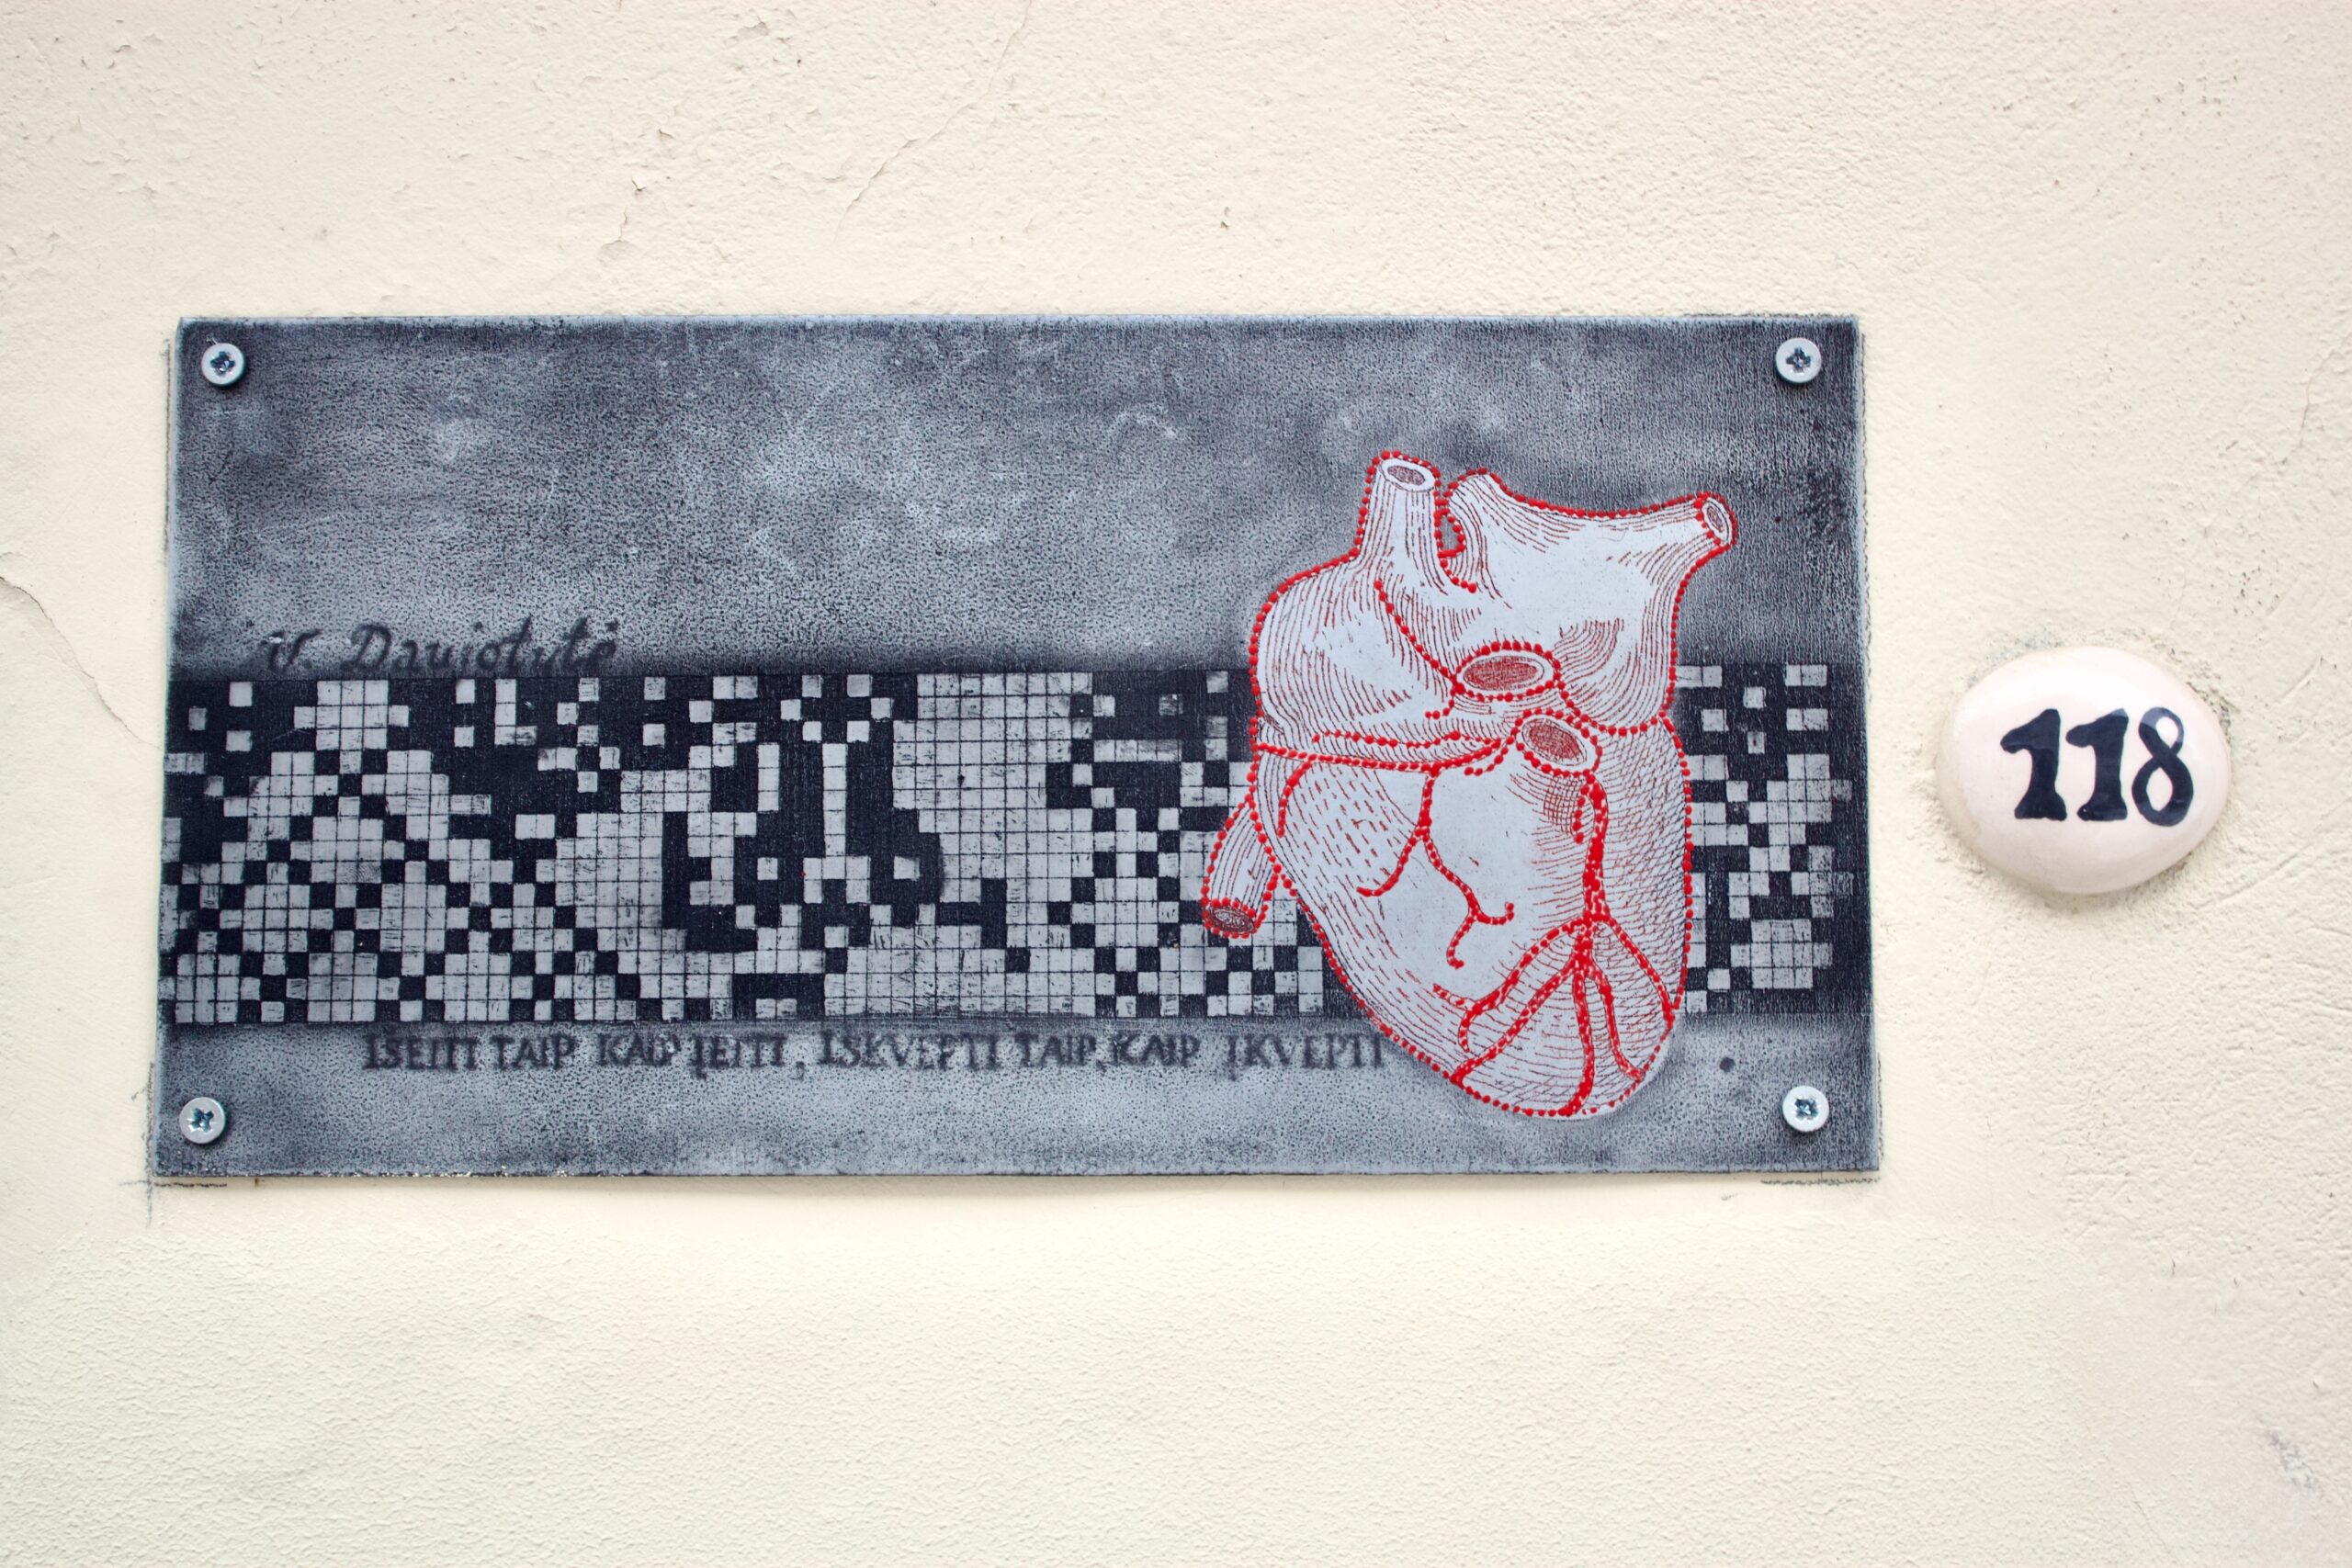 Literature Street - Heart 118